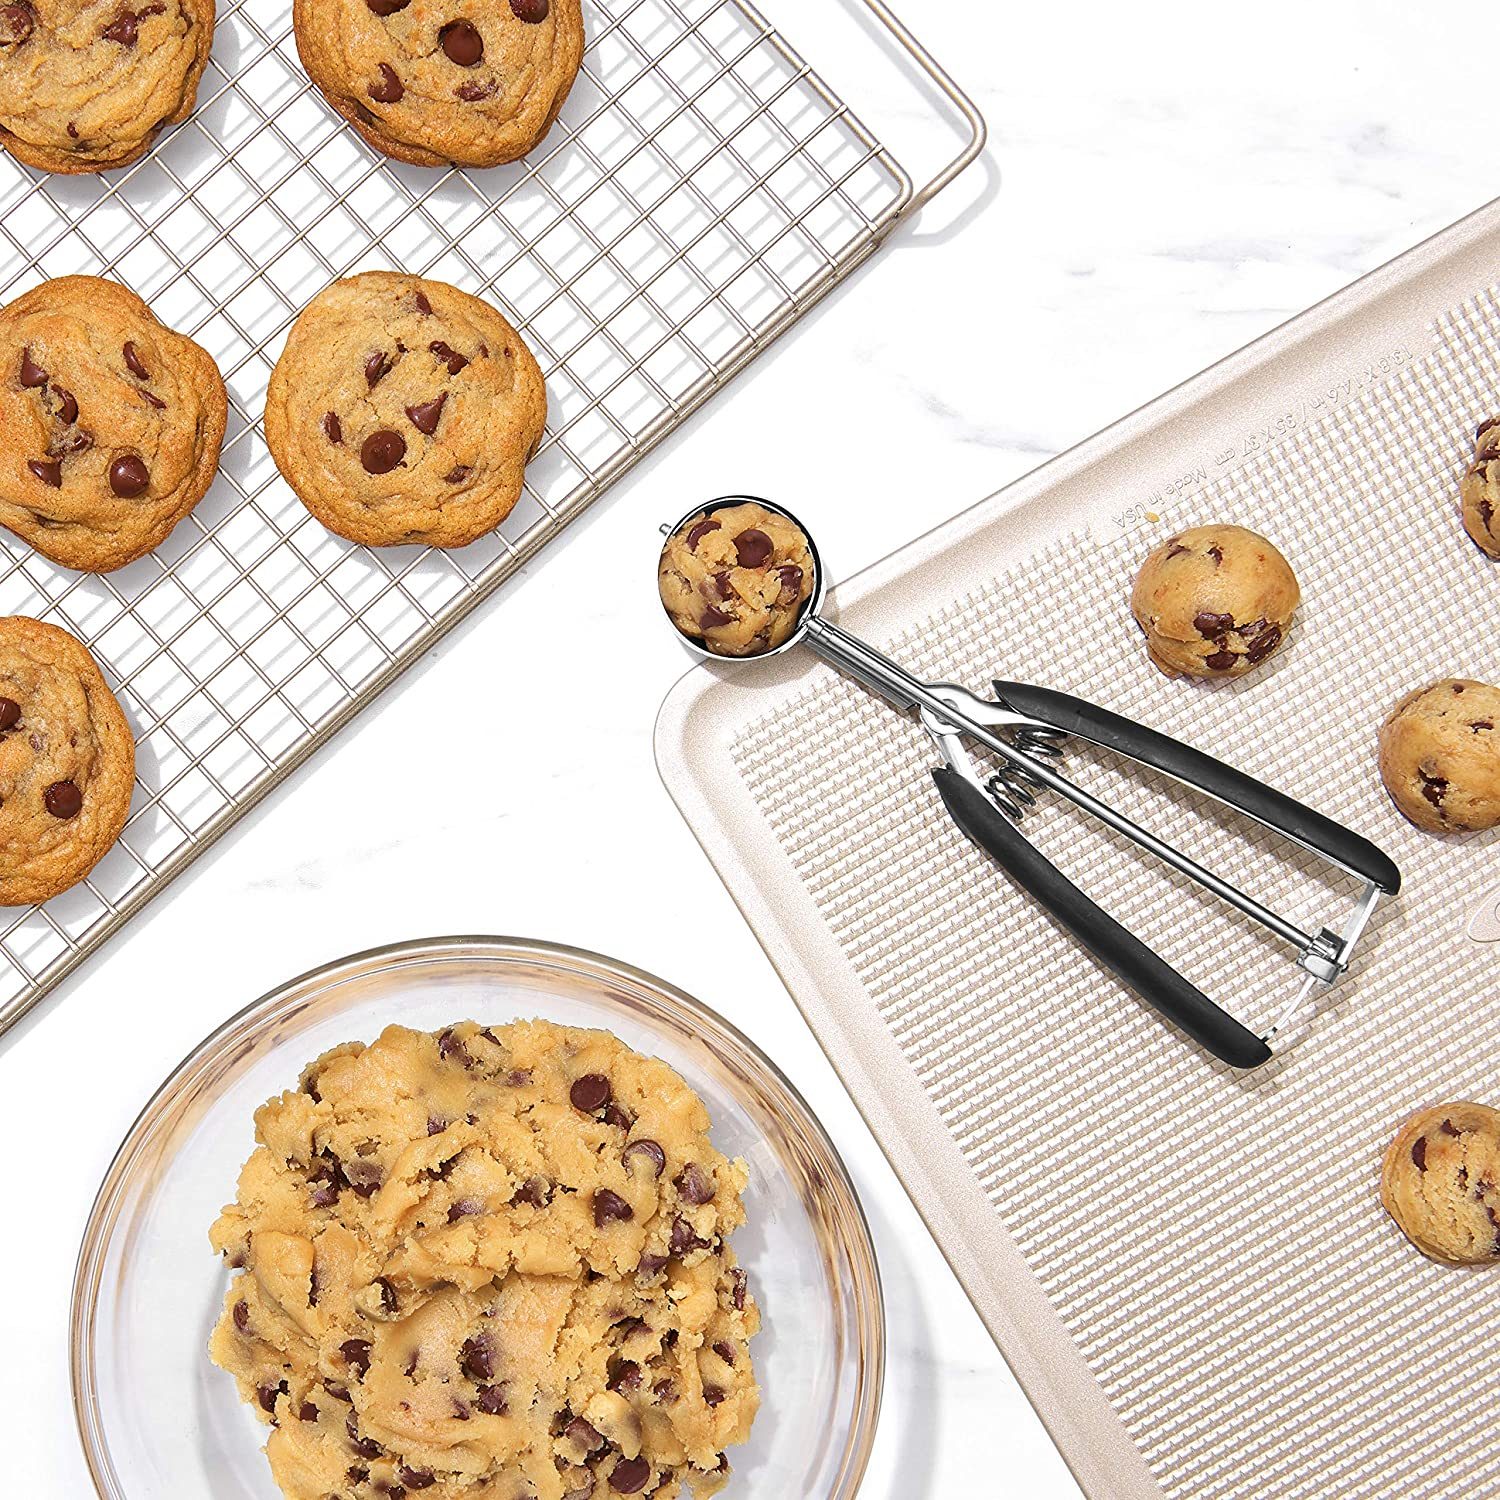 Kitchen Tool Love: Cookie Scoops